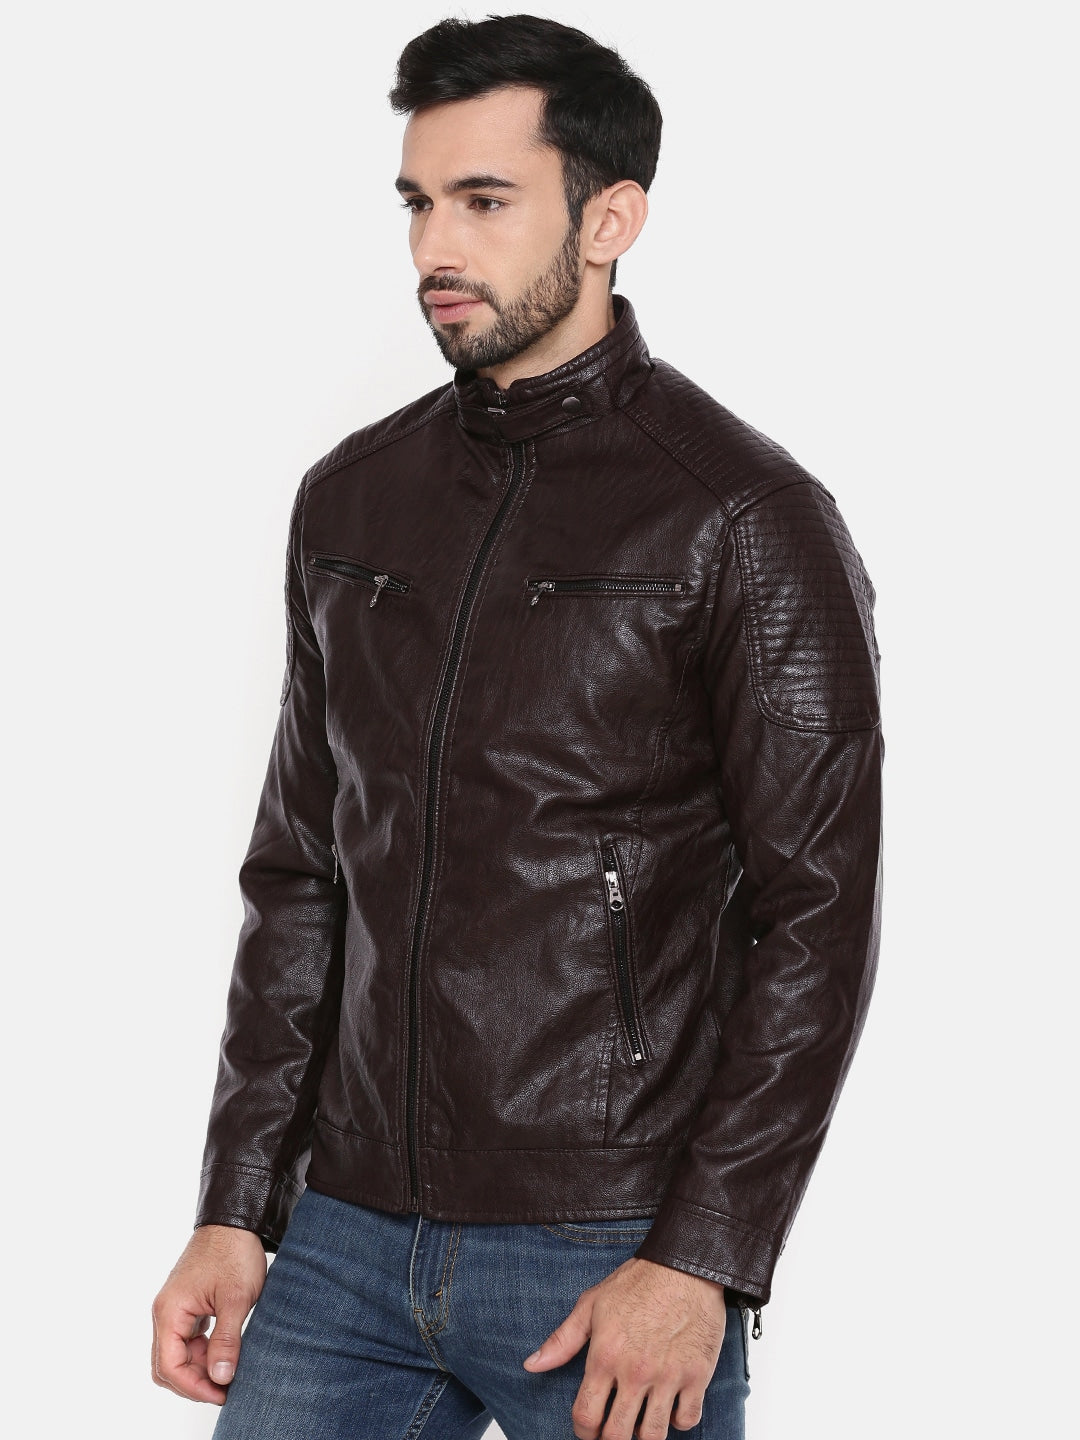 Men Solid Black Biker Leather Jacket | QAWACH